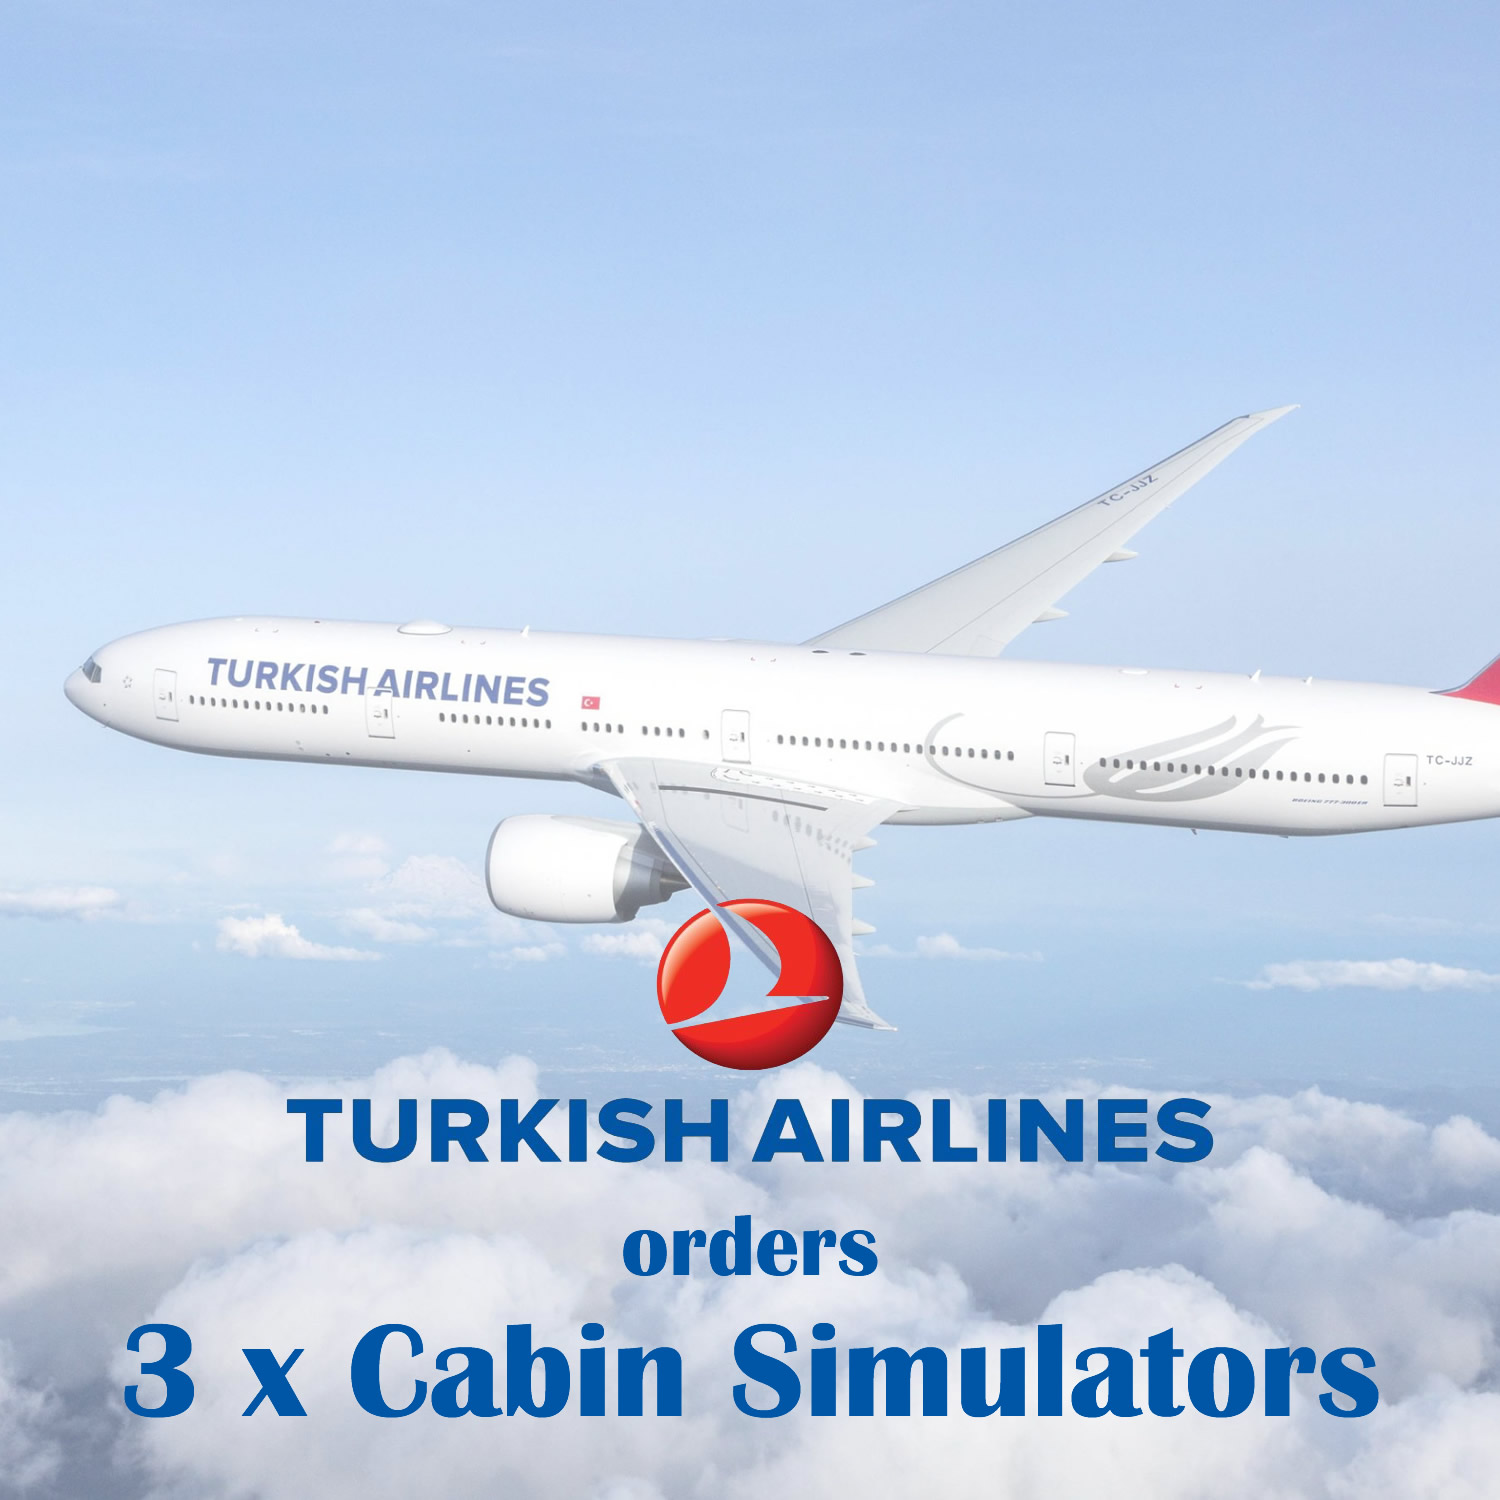 Turkish Airlines orders 3 x Cabin Simulators from SkyArt